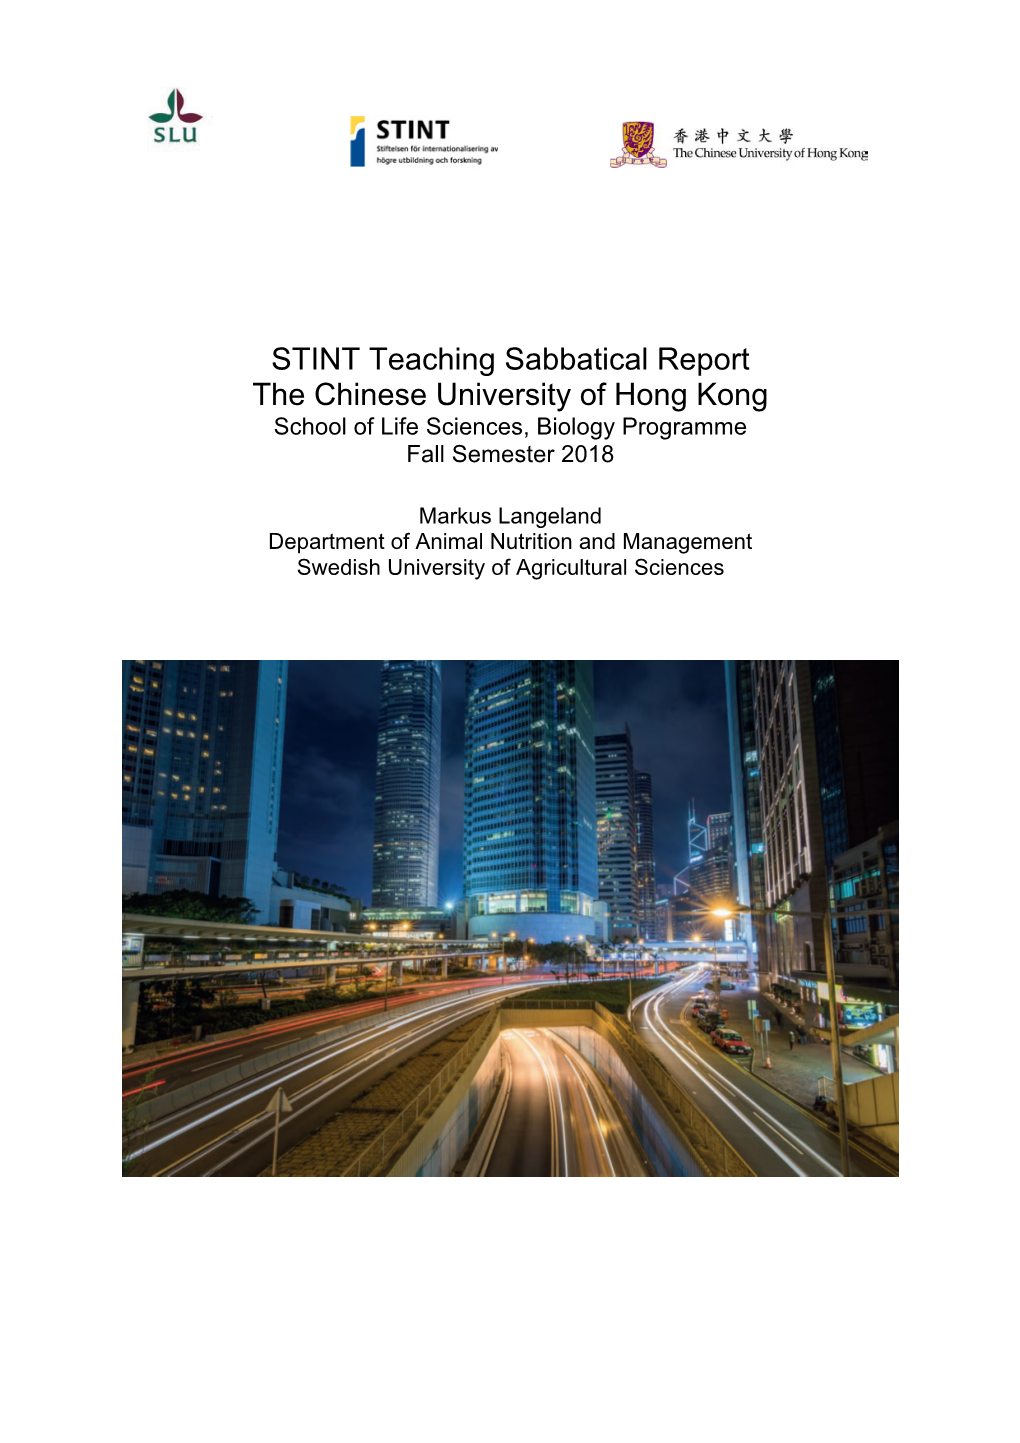 STINT Teaching Sabbatical Report the Chinese University of Hong Kong School of Life Sciences, Biology Programme Fall Semester 2018